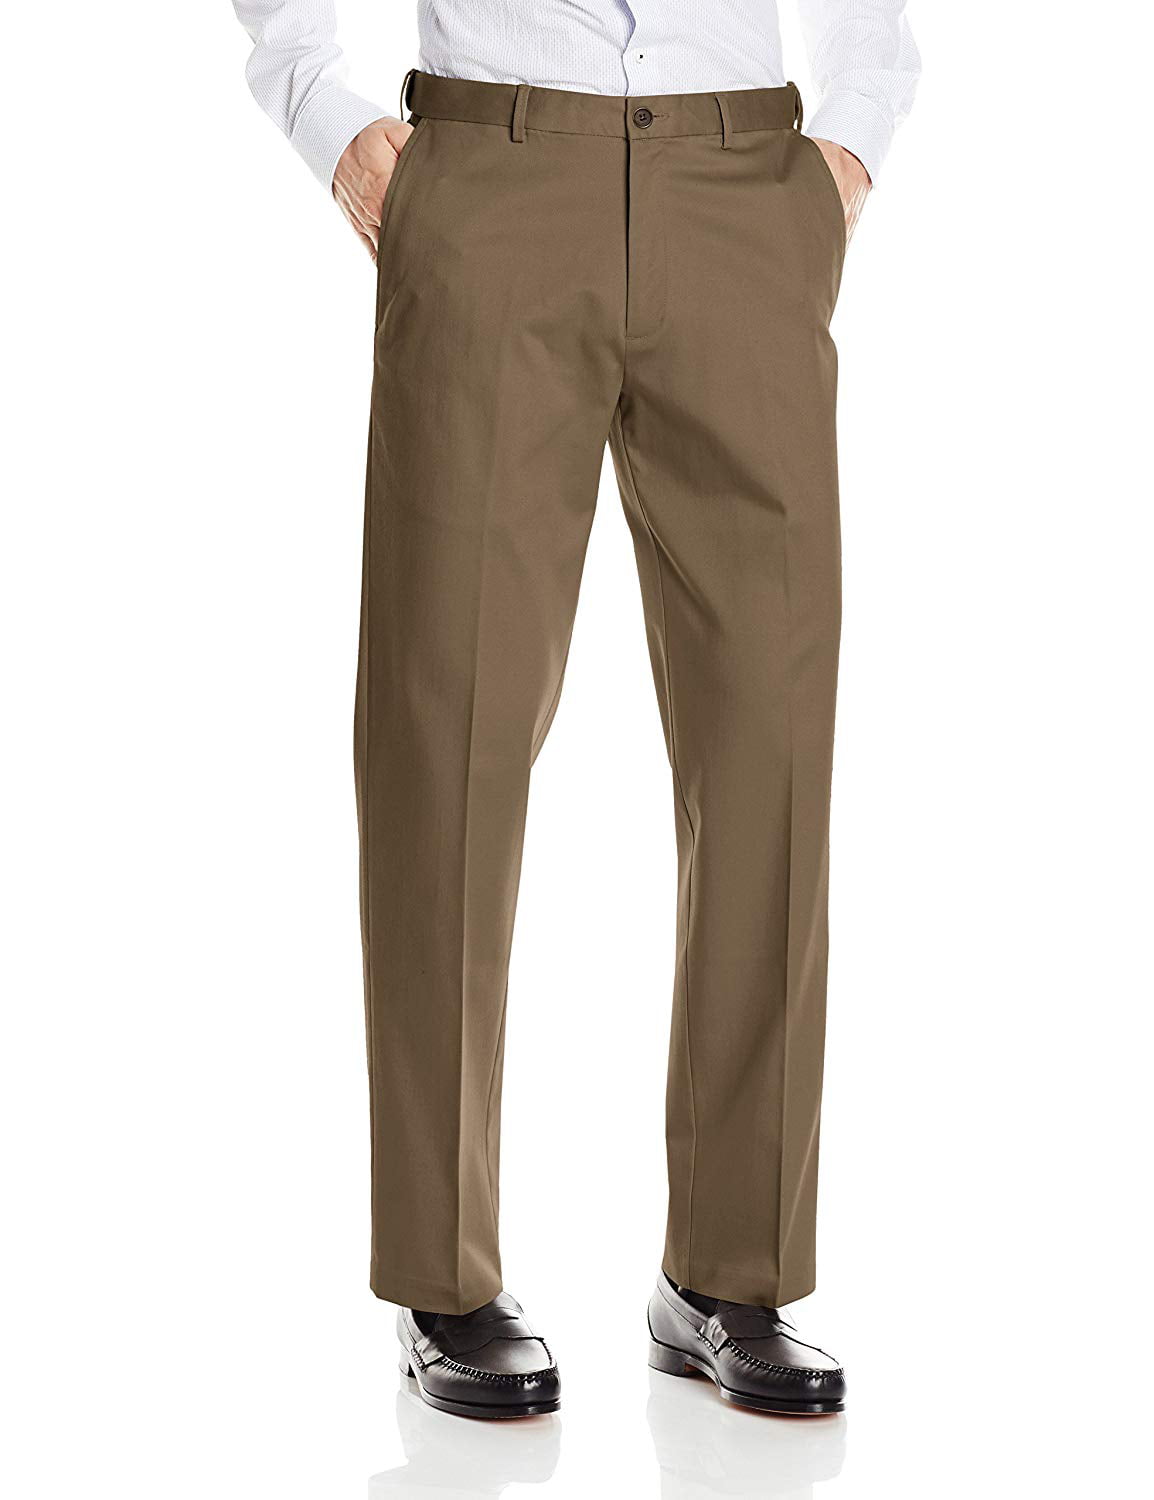 Haggar Mens 32X30 Dress Flat Front Stretch Khaki Pants - Walmart.com ...